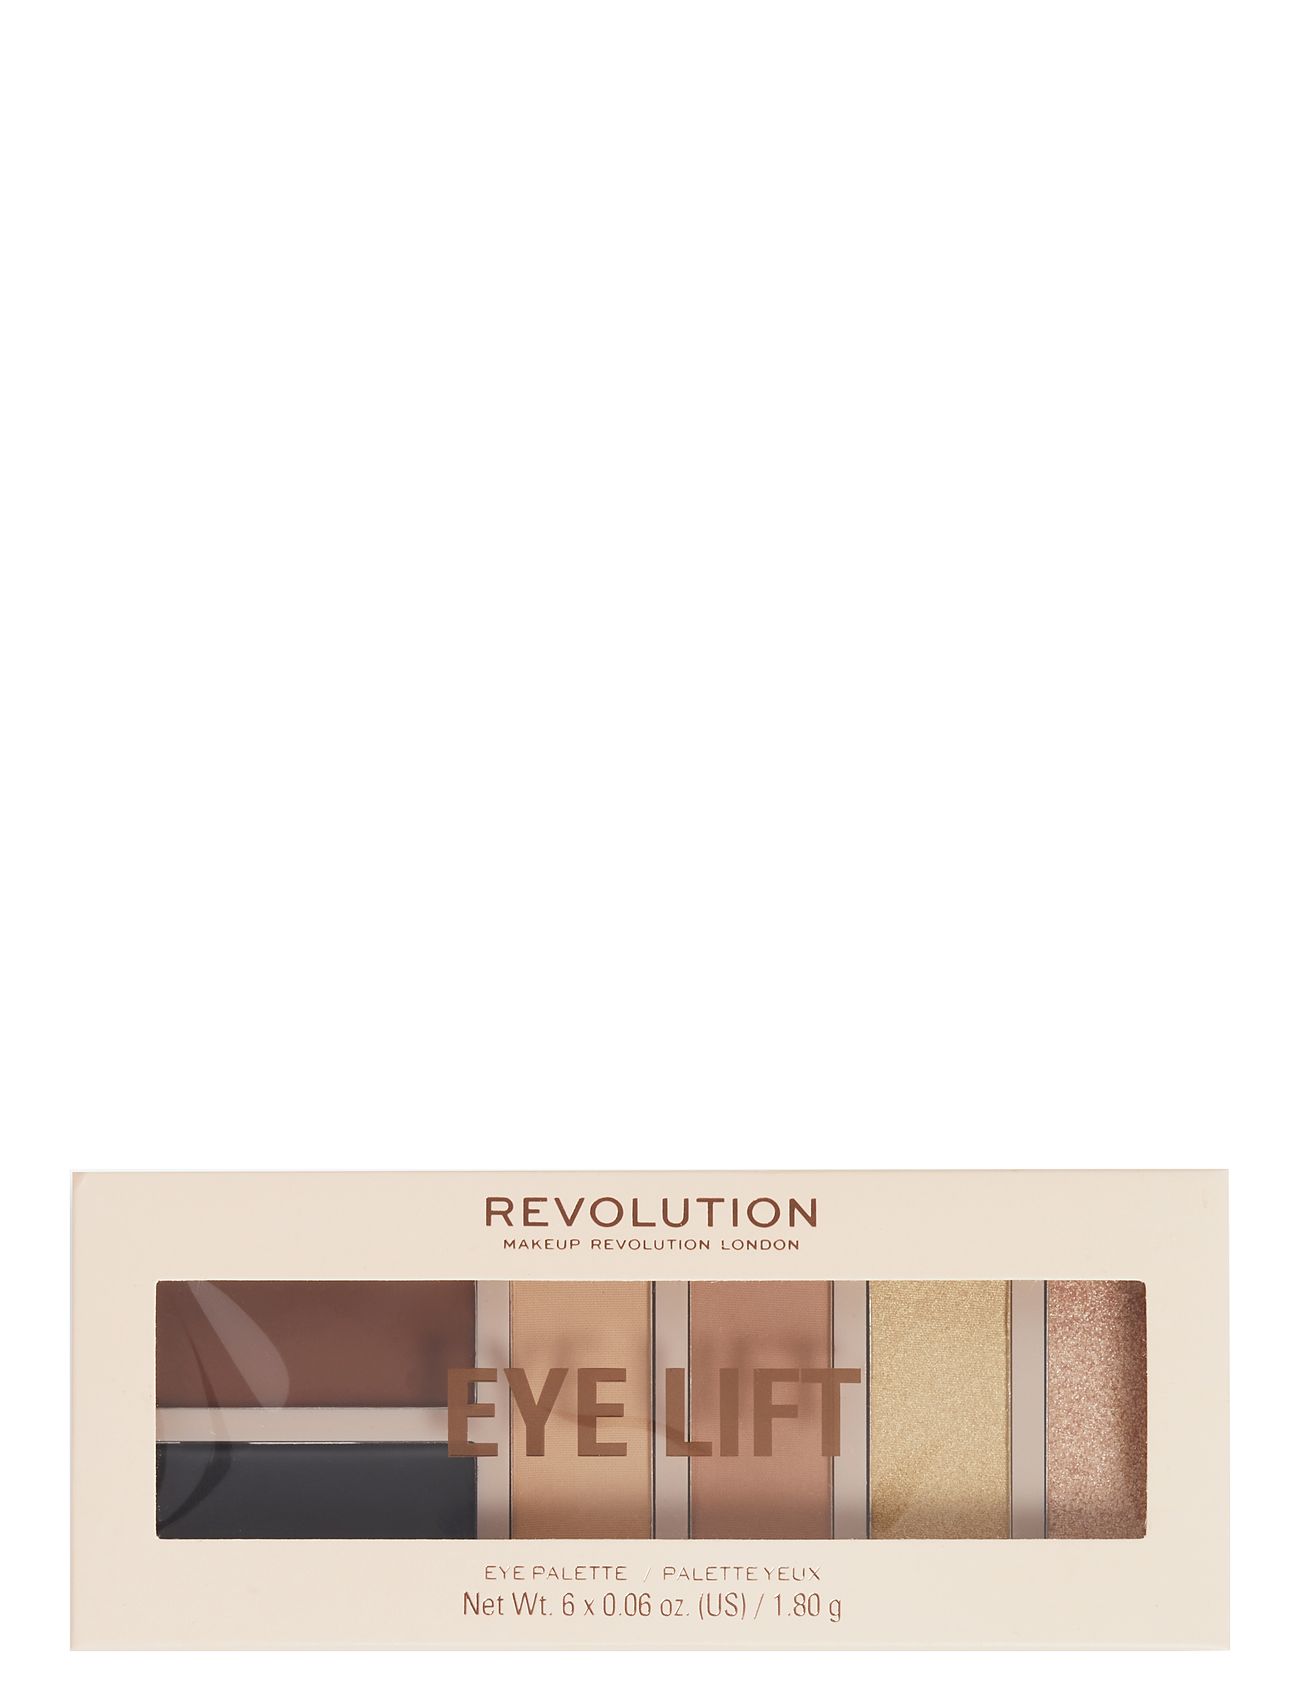 Revolution Eye Lift Palette Ögonskugga Palette Smink Multi/patterned Makeup Revolution